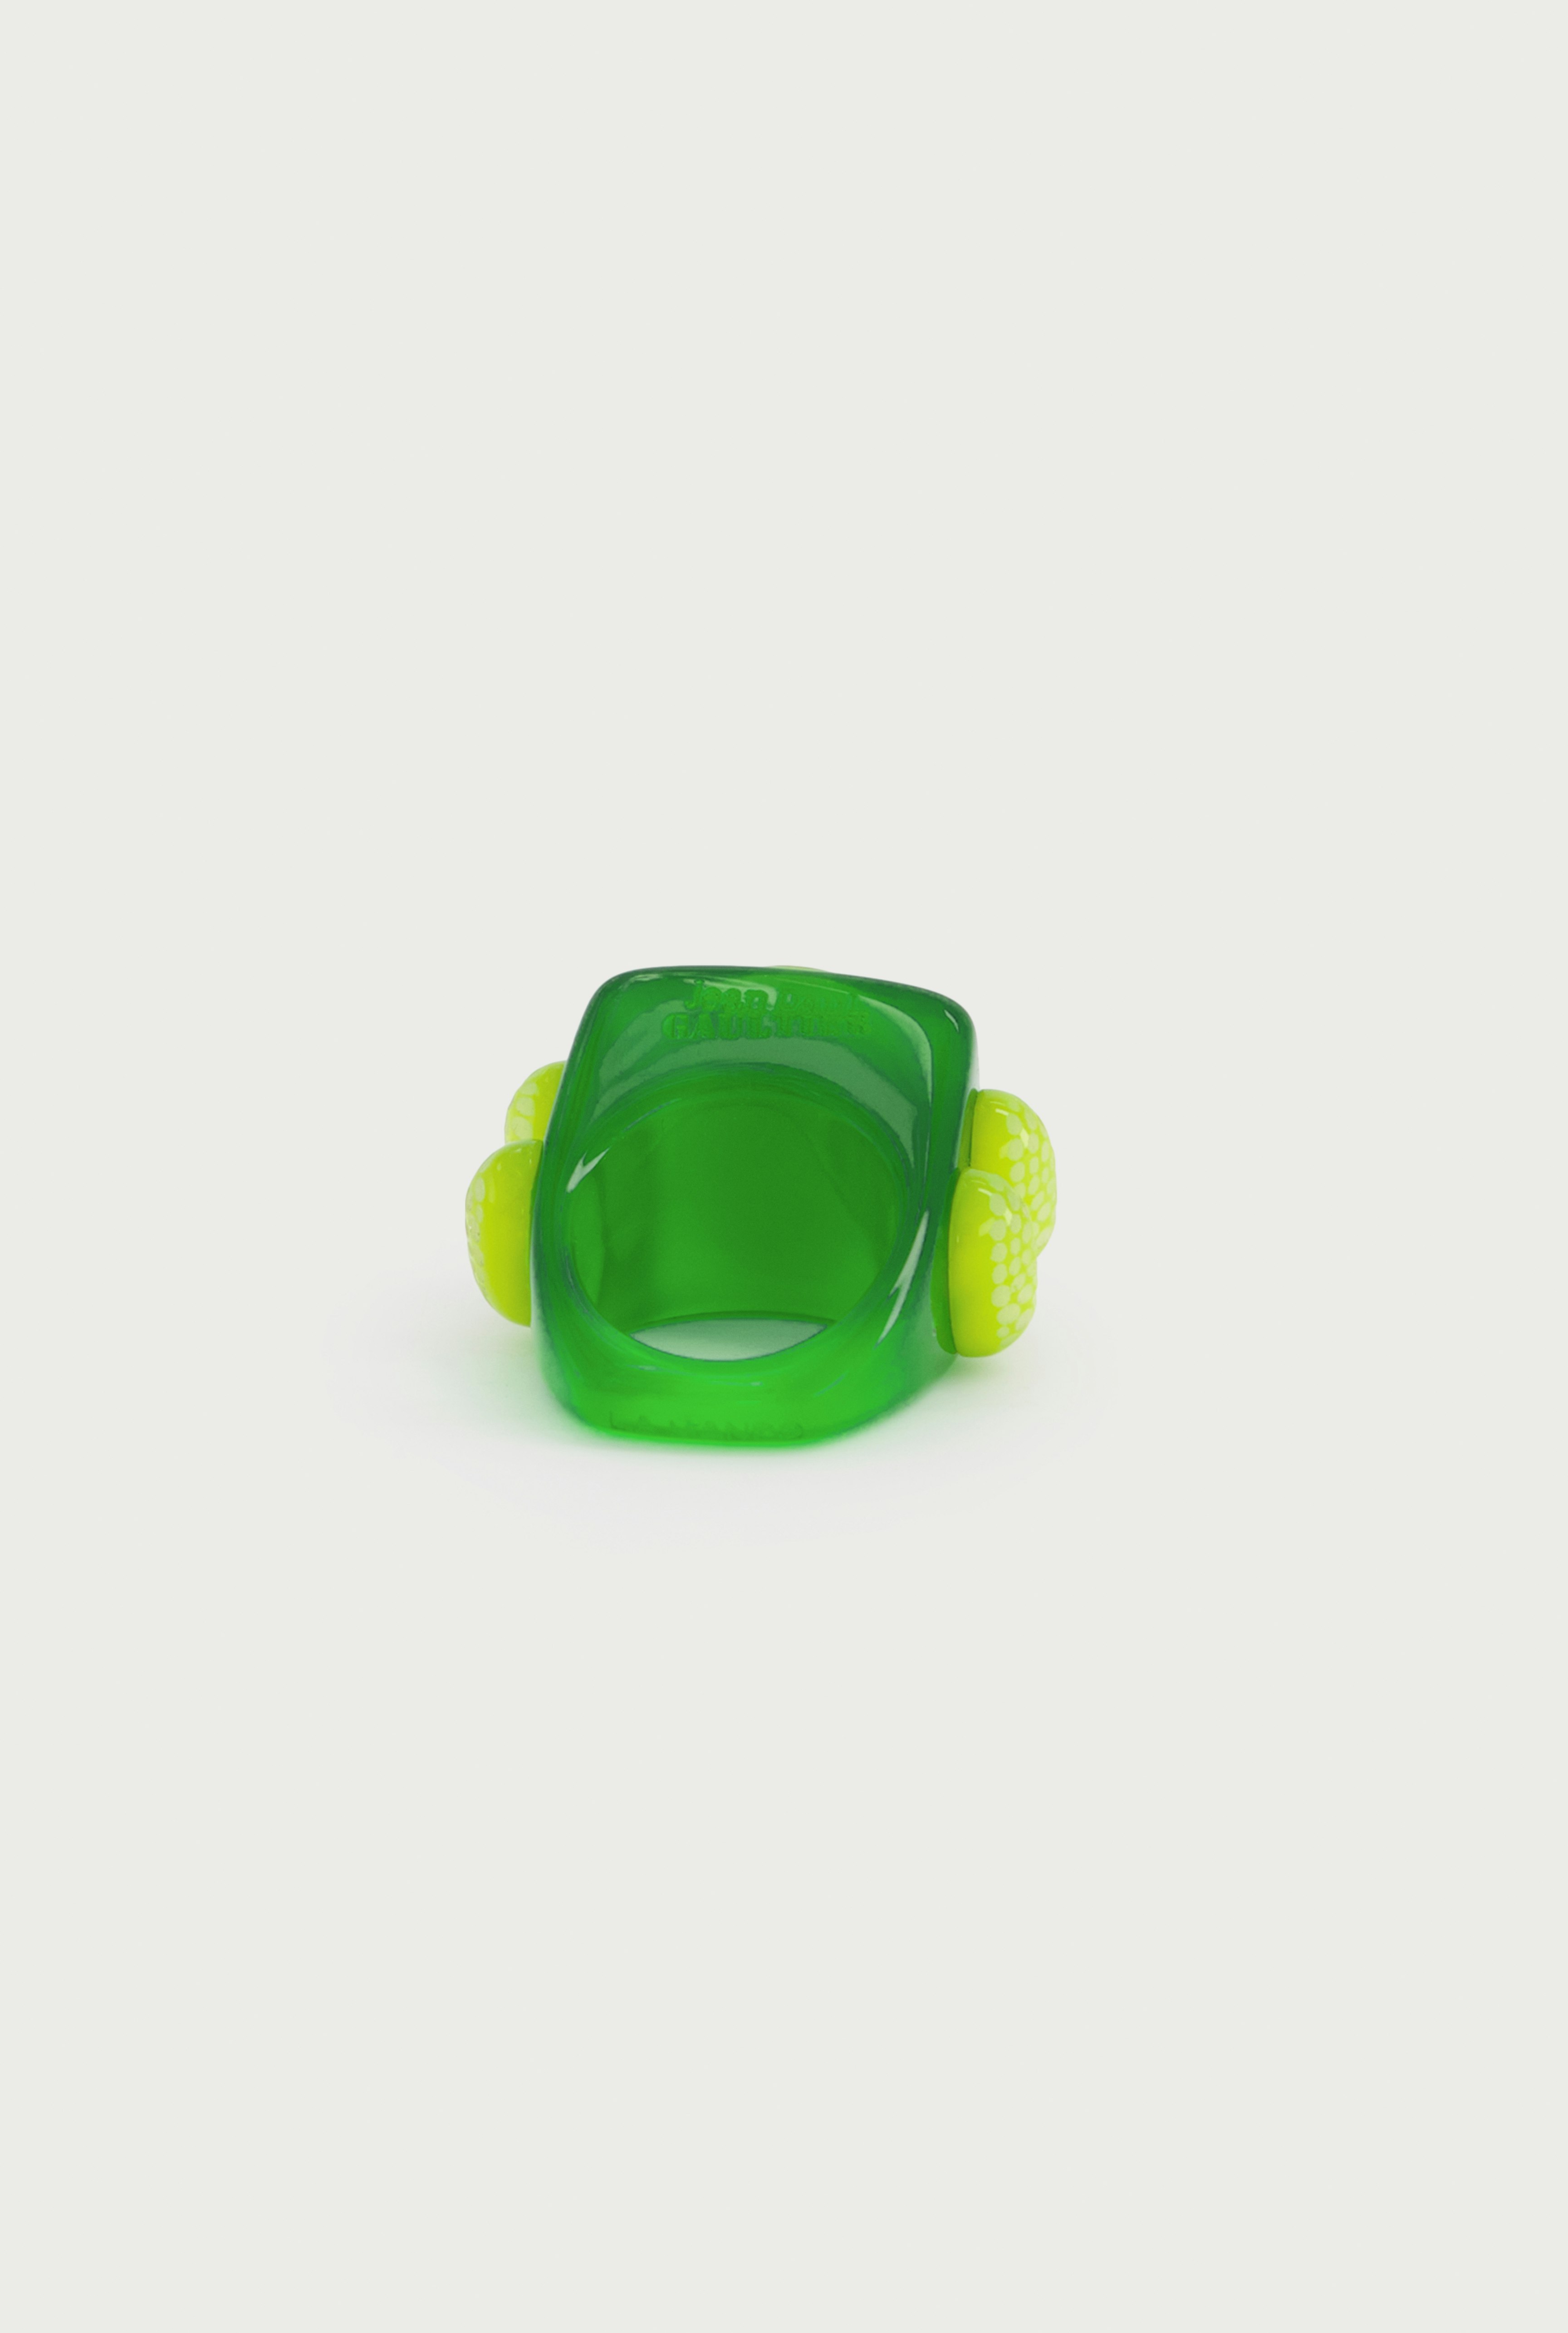 The Verde Botella Ring